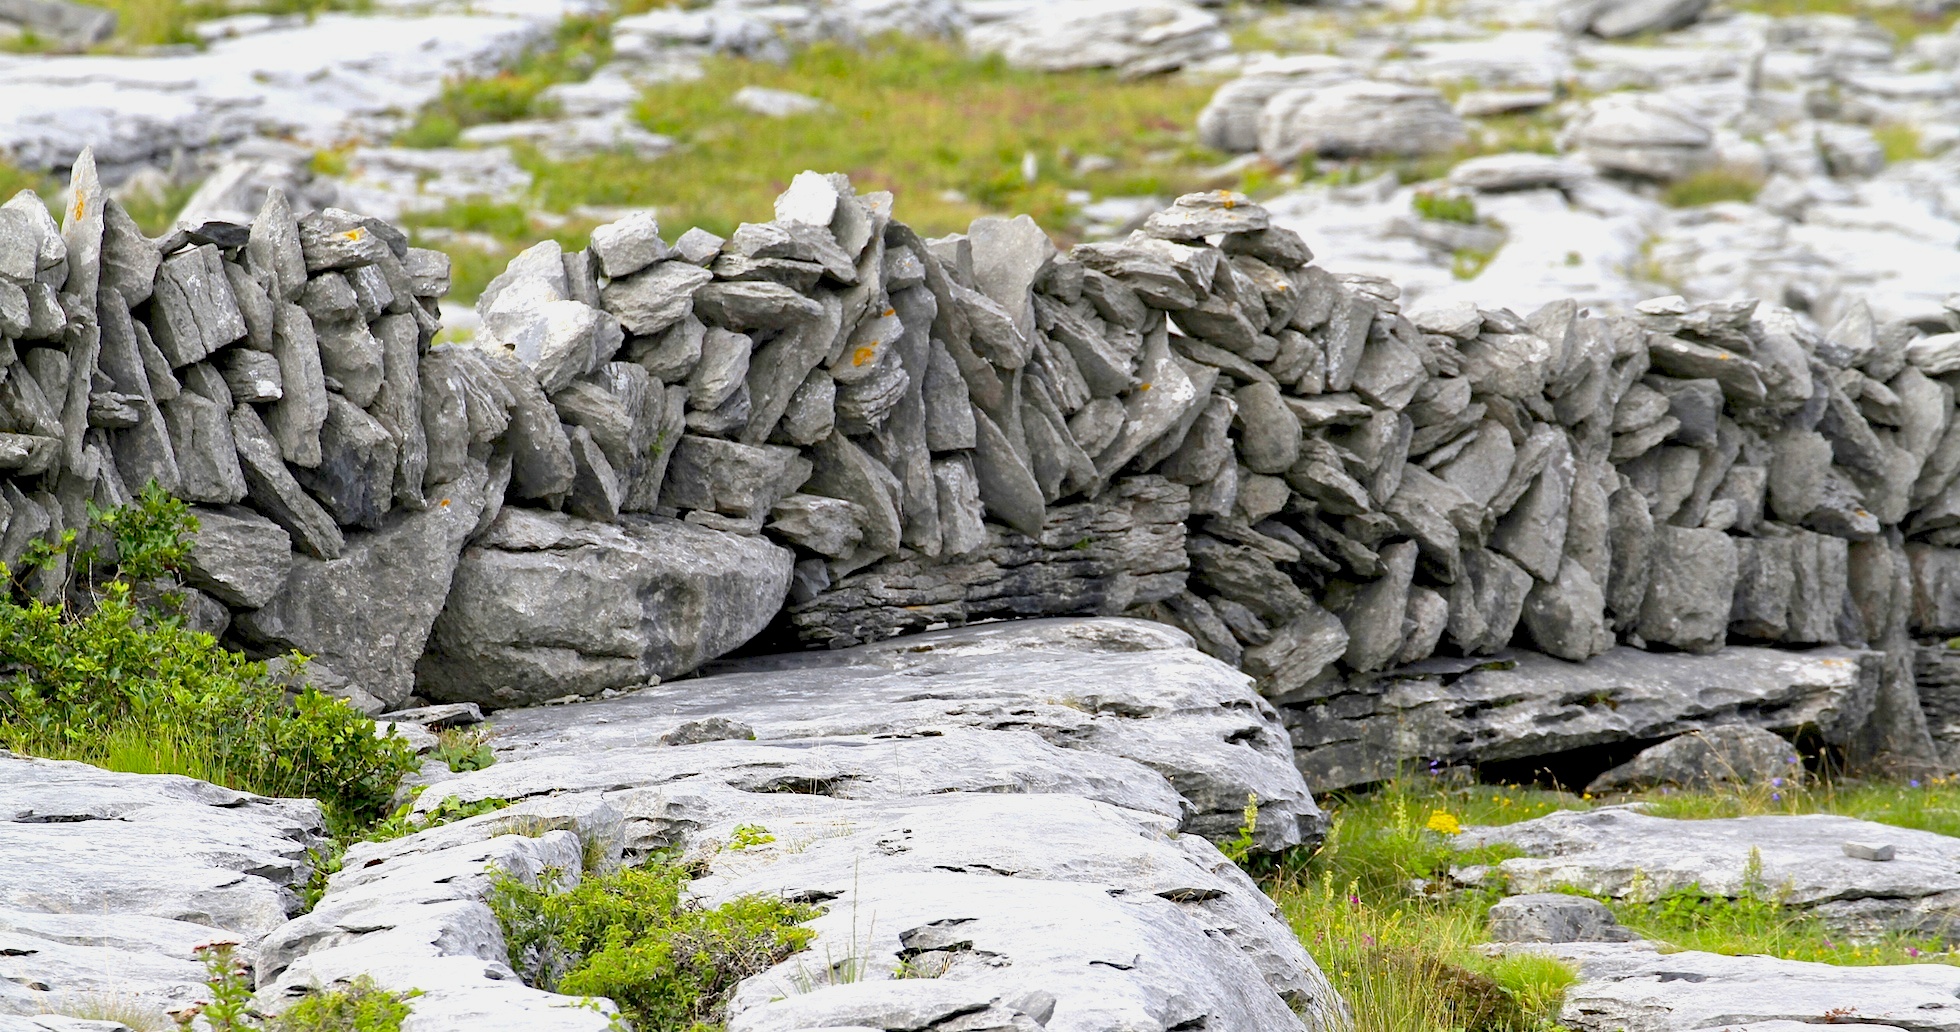 A sideways glimpse at the Burren